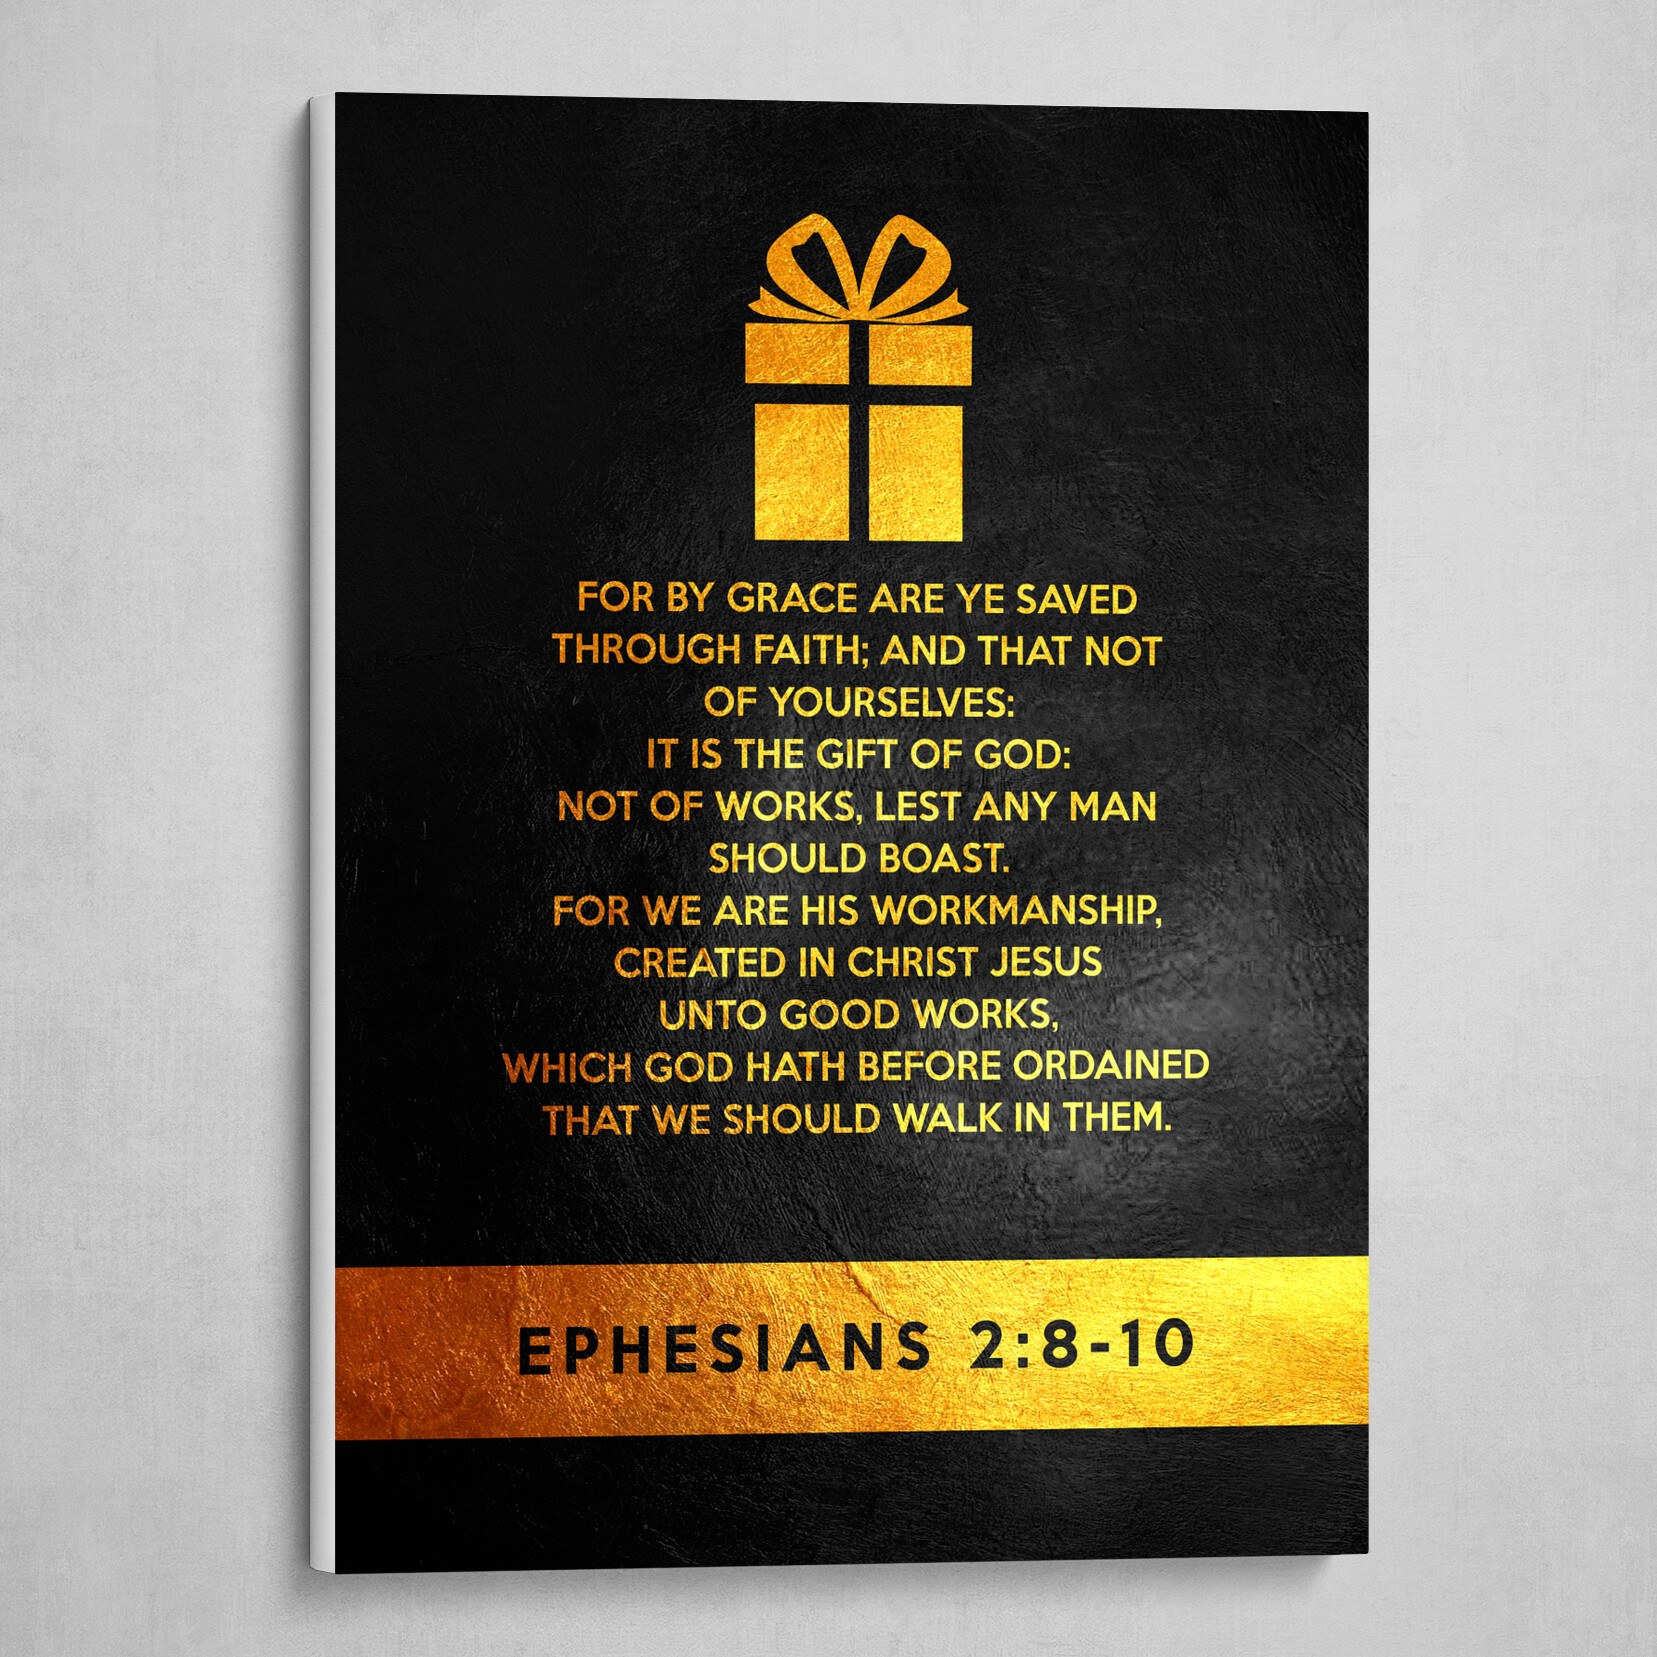 Ephesians 2:8-10 Bible Verse Text Art